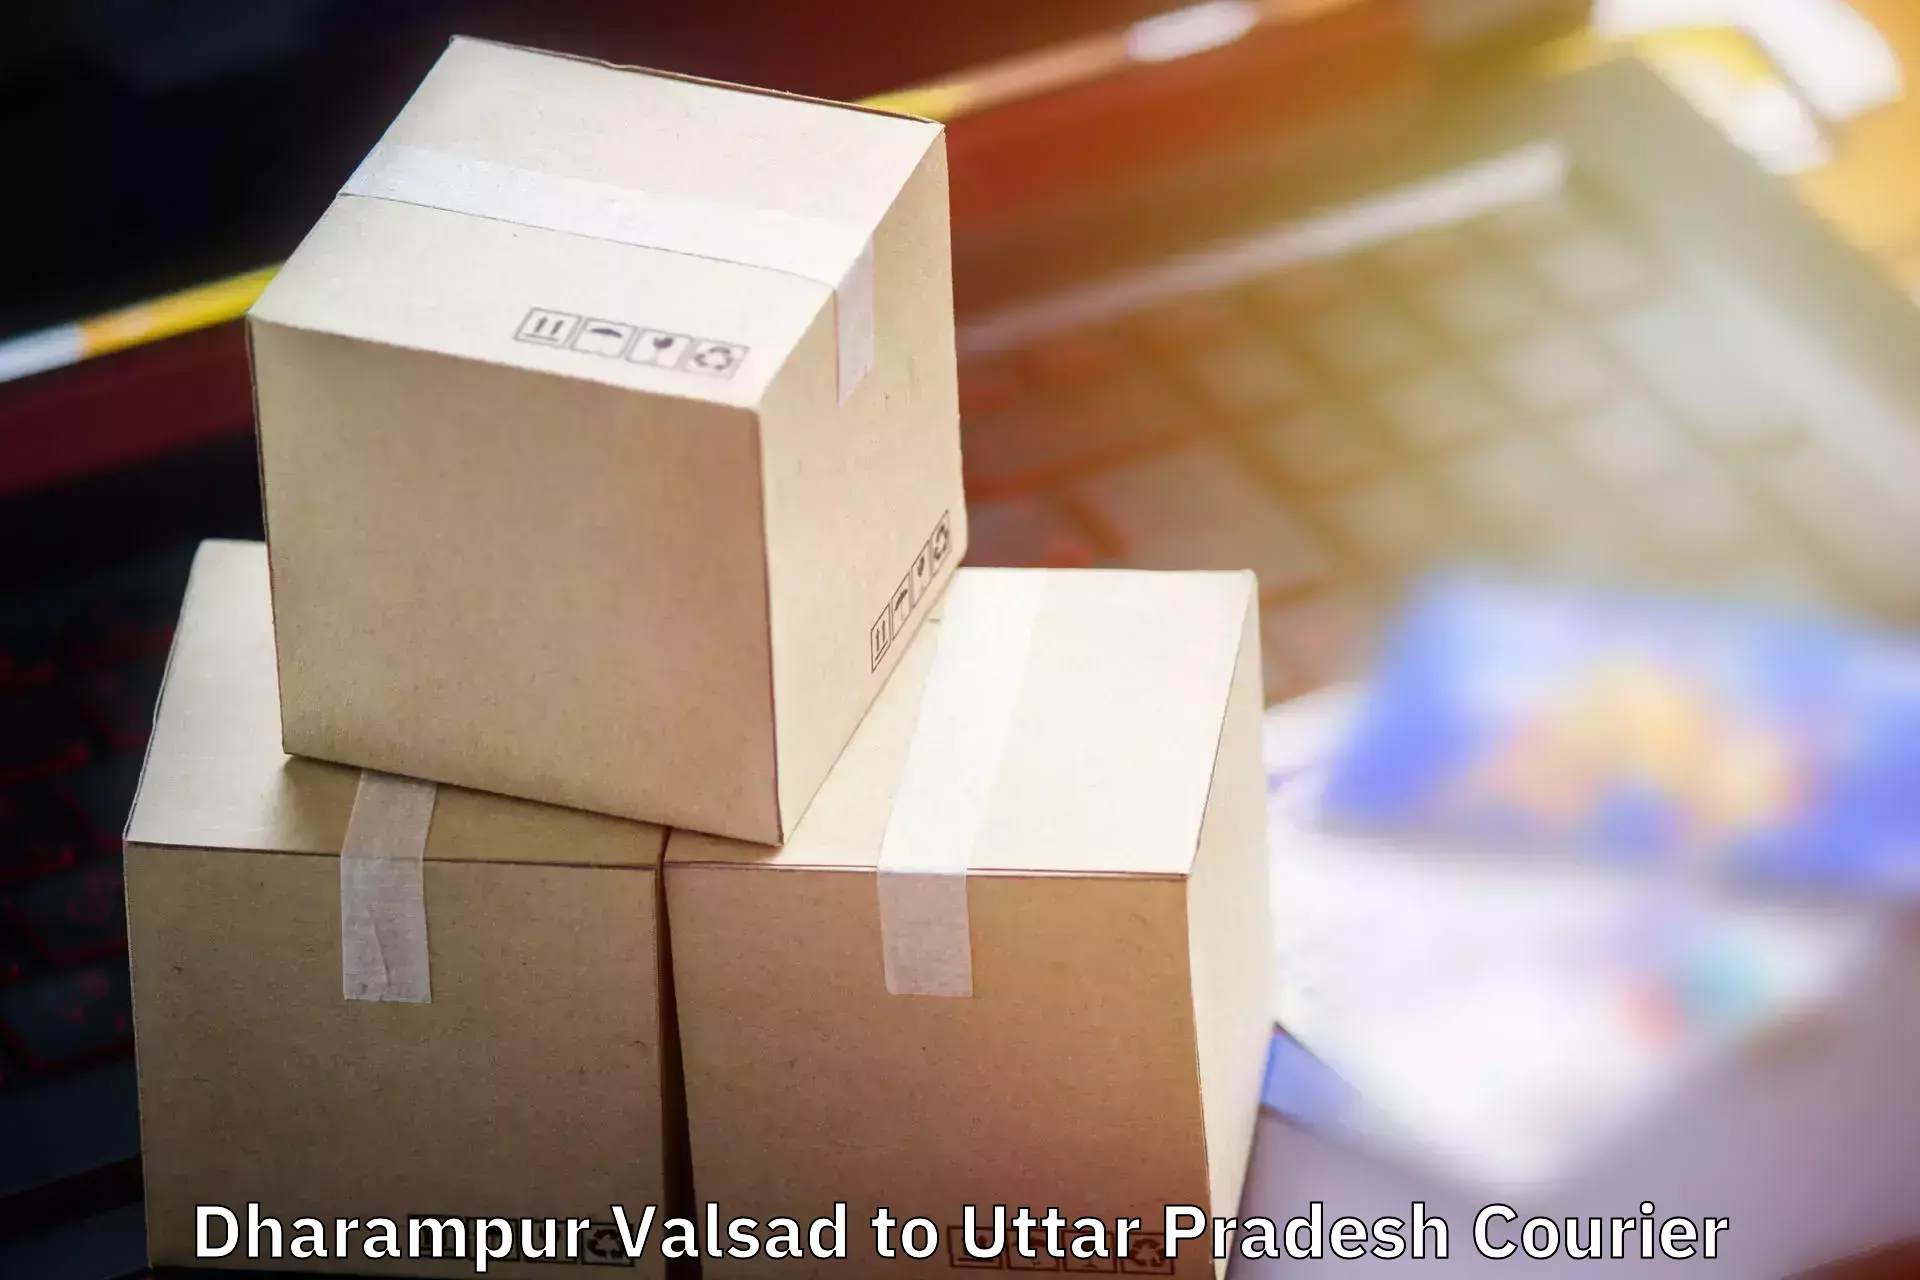 Baggage shipping service Dharampur Valsad to Kasganj